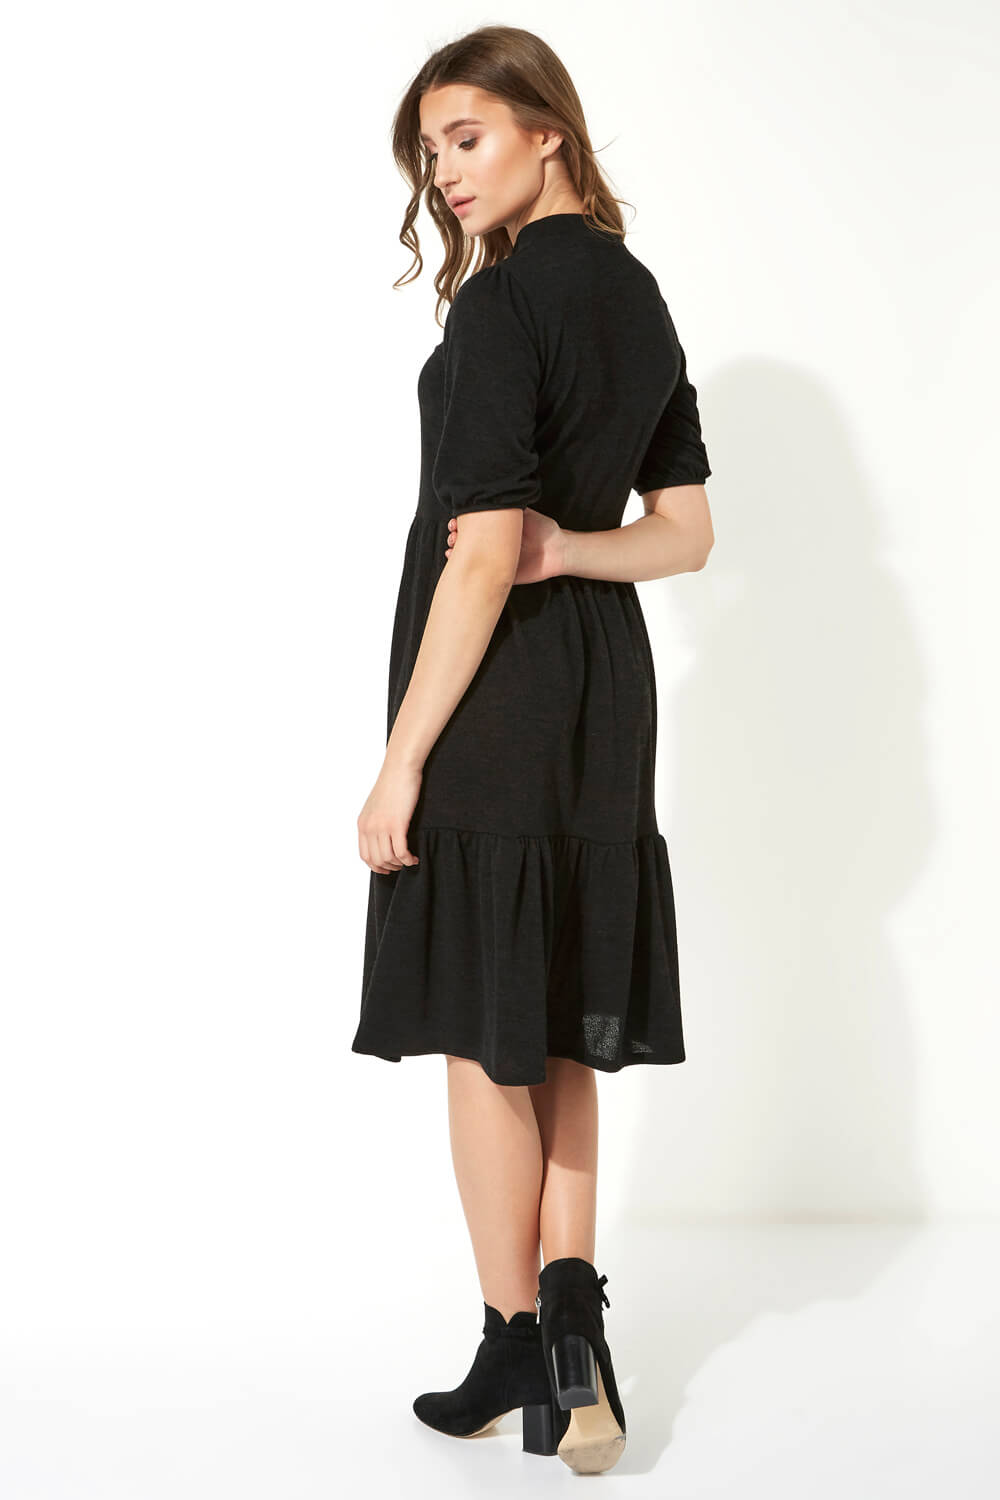 Black Puff Sleeve Knitted Midi Dress, Image 2 of 5